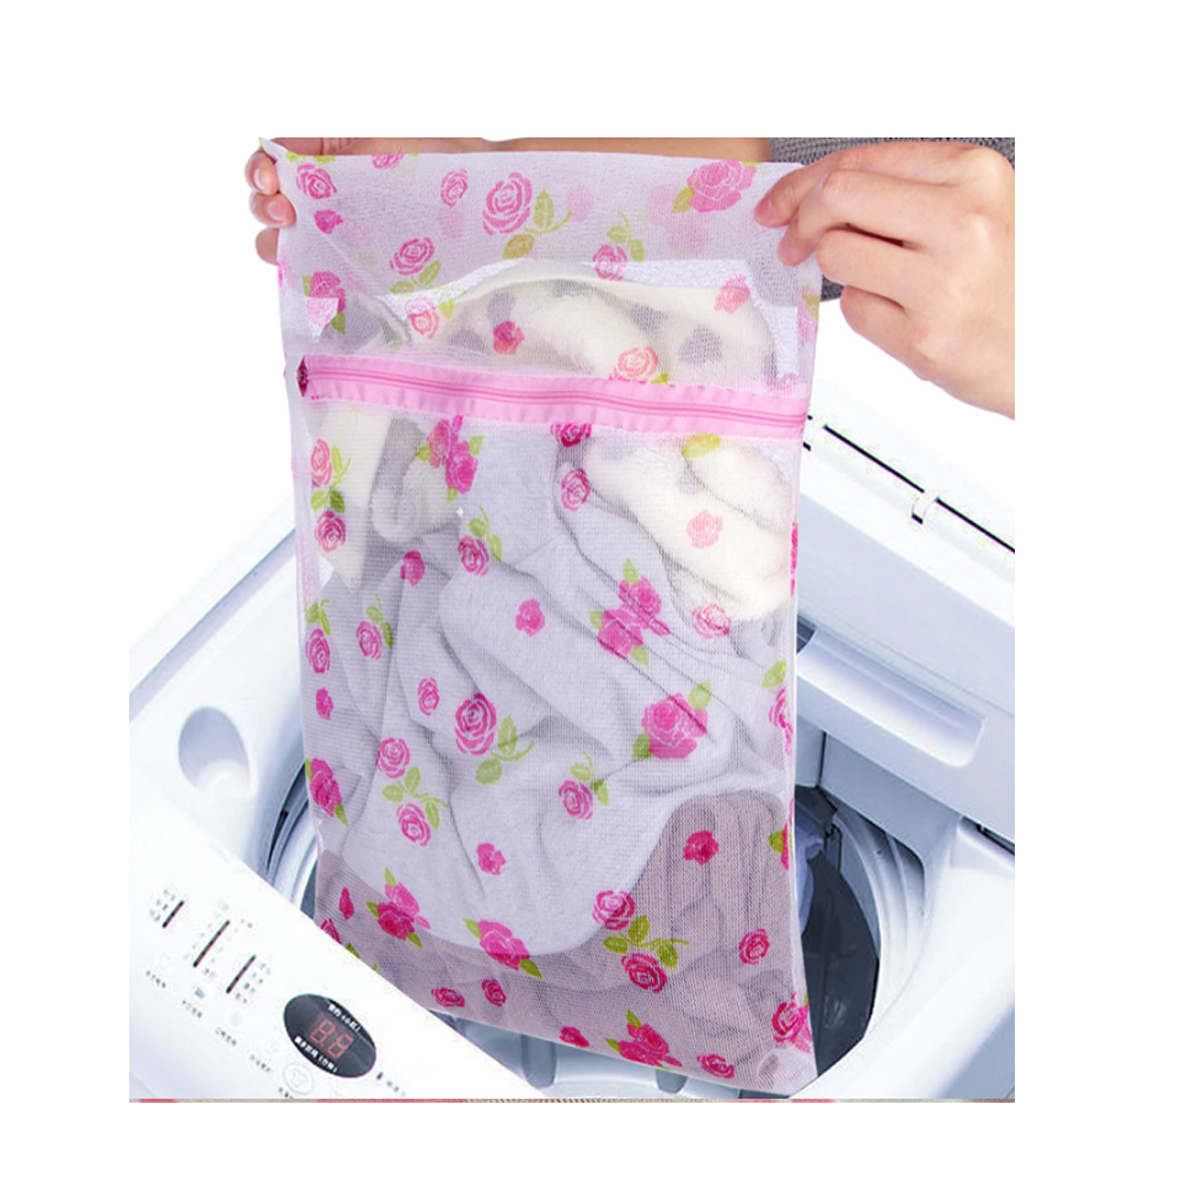 Zipped Wash Bag Washing Laundry Net Lingerie Mesh Undergarments Bra Clothes  Organizer